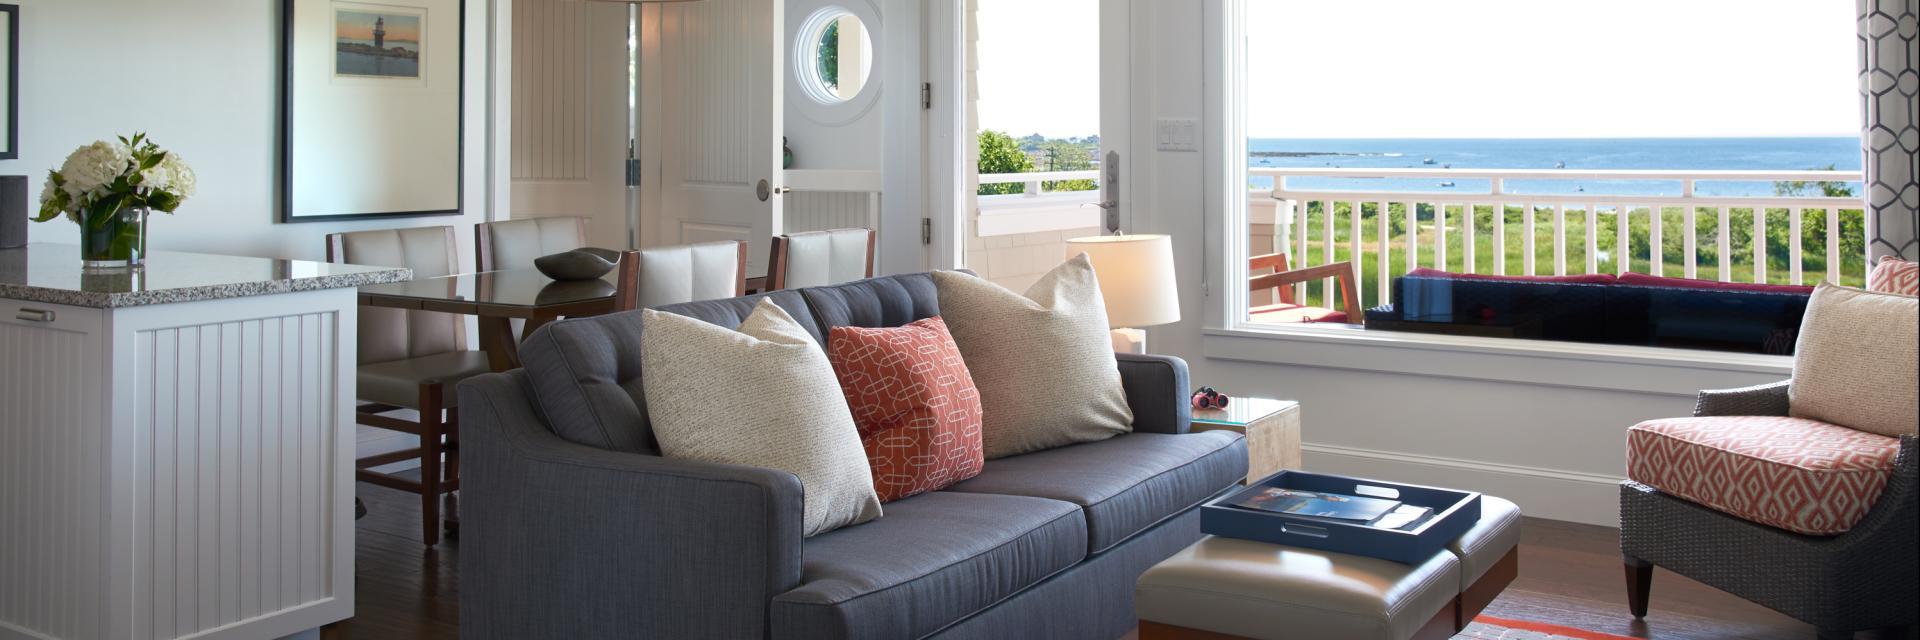 One bedroom beach suite with ocean view